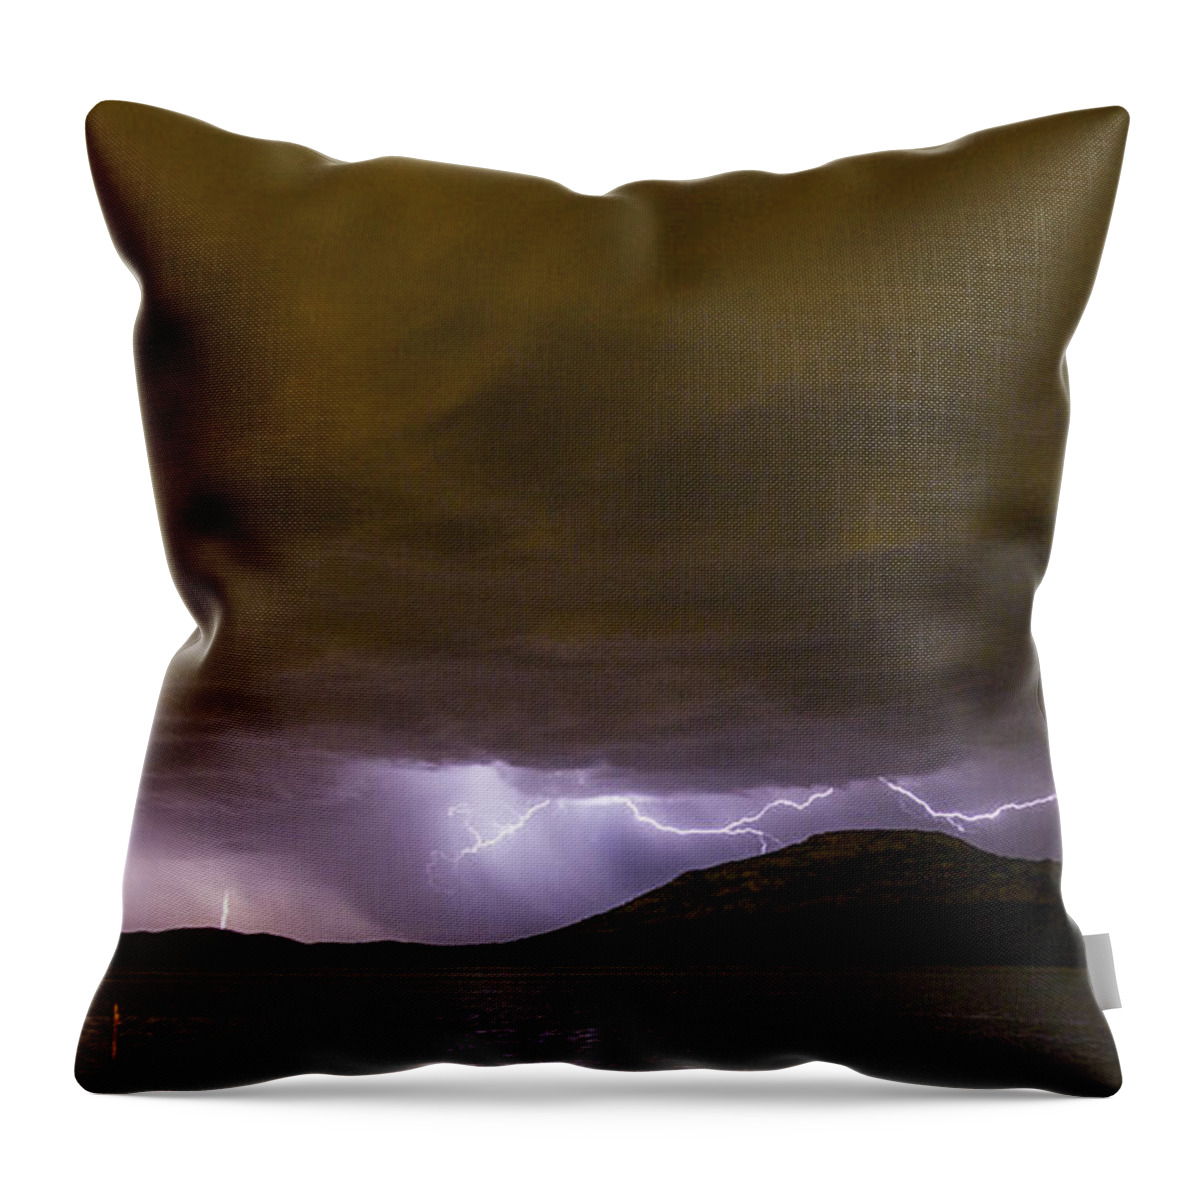 Lake Lawtonka Throw Pillow featuring the photograph Zeus' Wrath by Angus HOOPER III